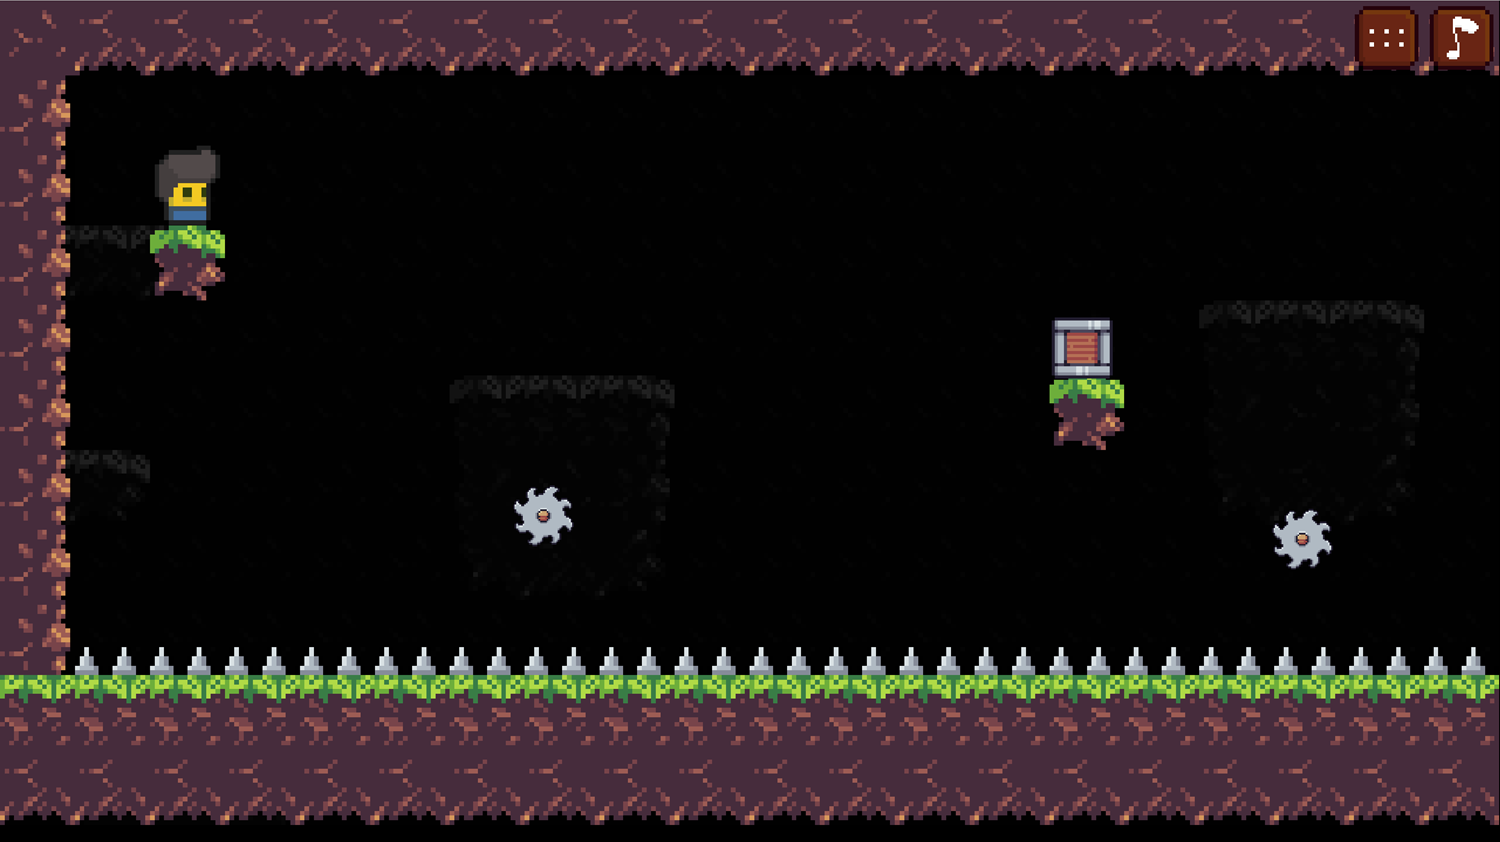 Drop Slime Adventure Game Final Stage Screenshot.